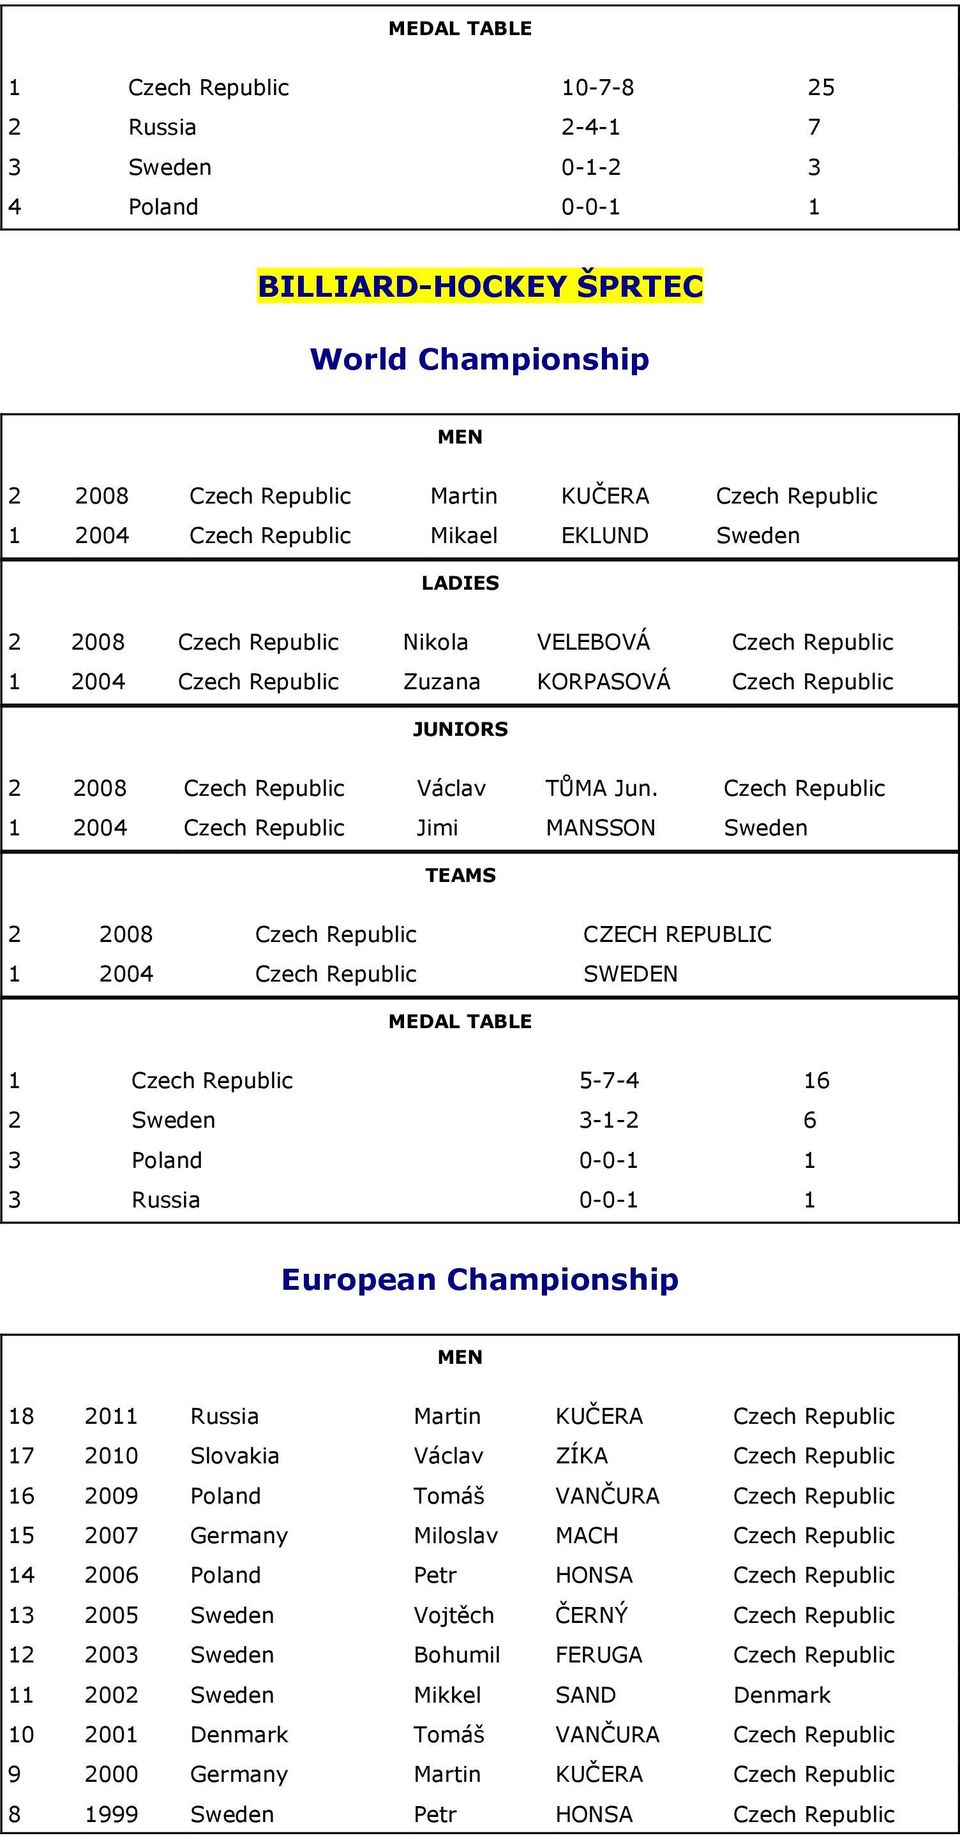 1 2004 Jimi MANSSON Sweden 2 2008 CZECH REPUBLIC 1 2004 SWEDEN MEDAL TABLE 1 5-7-4 16 2 Sweden 3-1-2 6 3 Poland 0-0-1 1 3 Russia 0-0-1 1 European Championship 18 2011 Russia